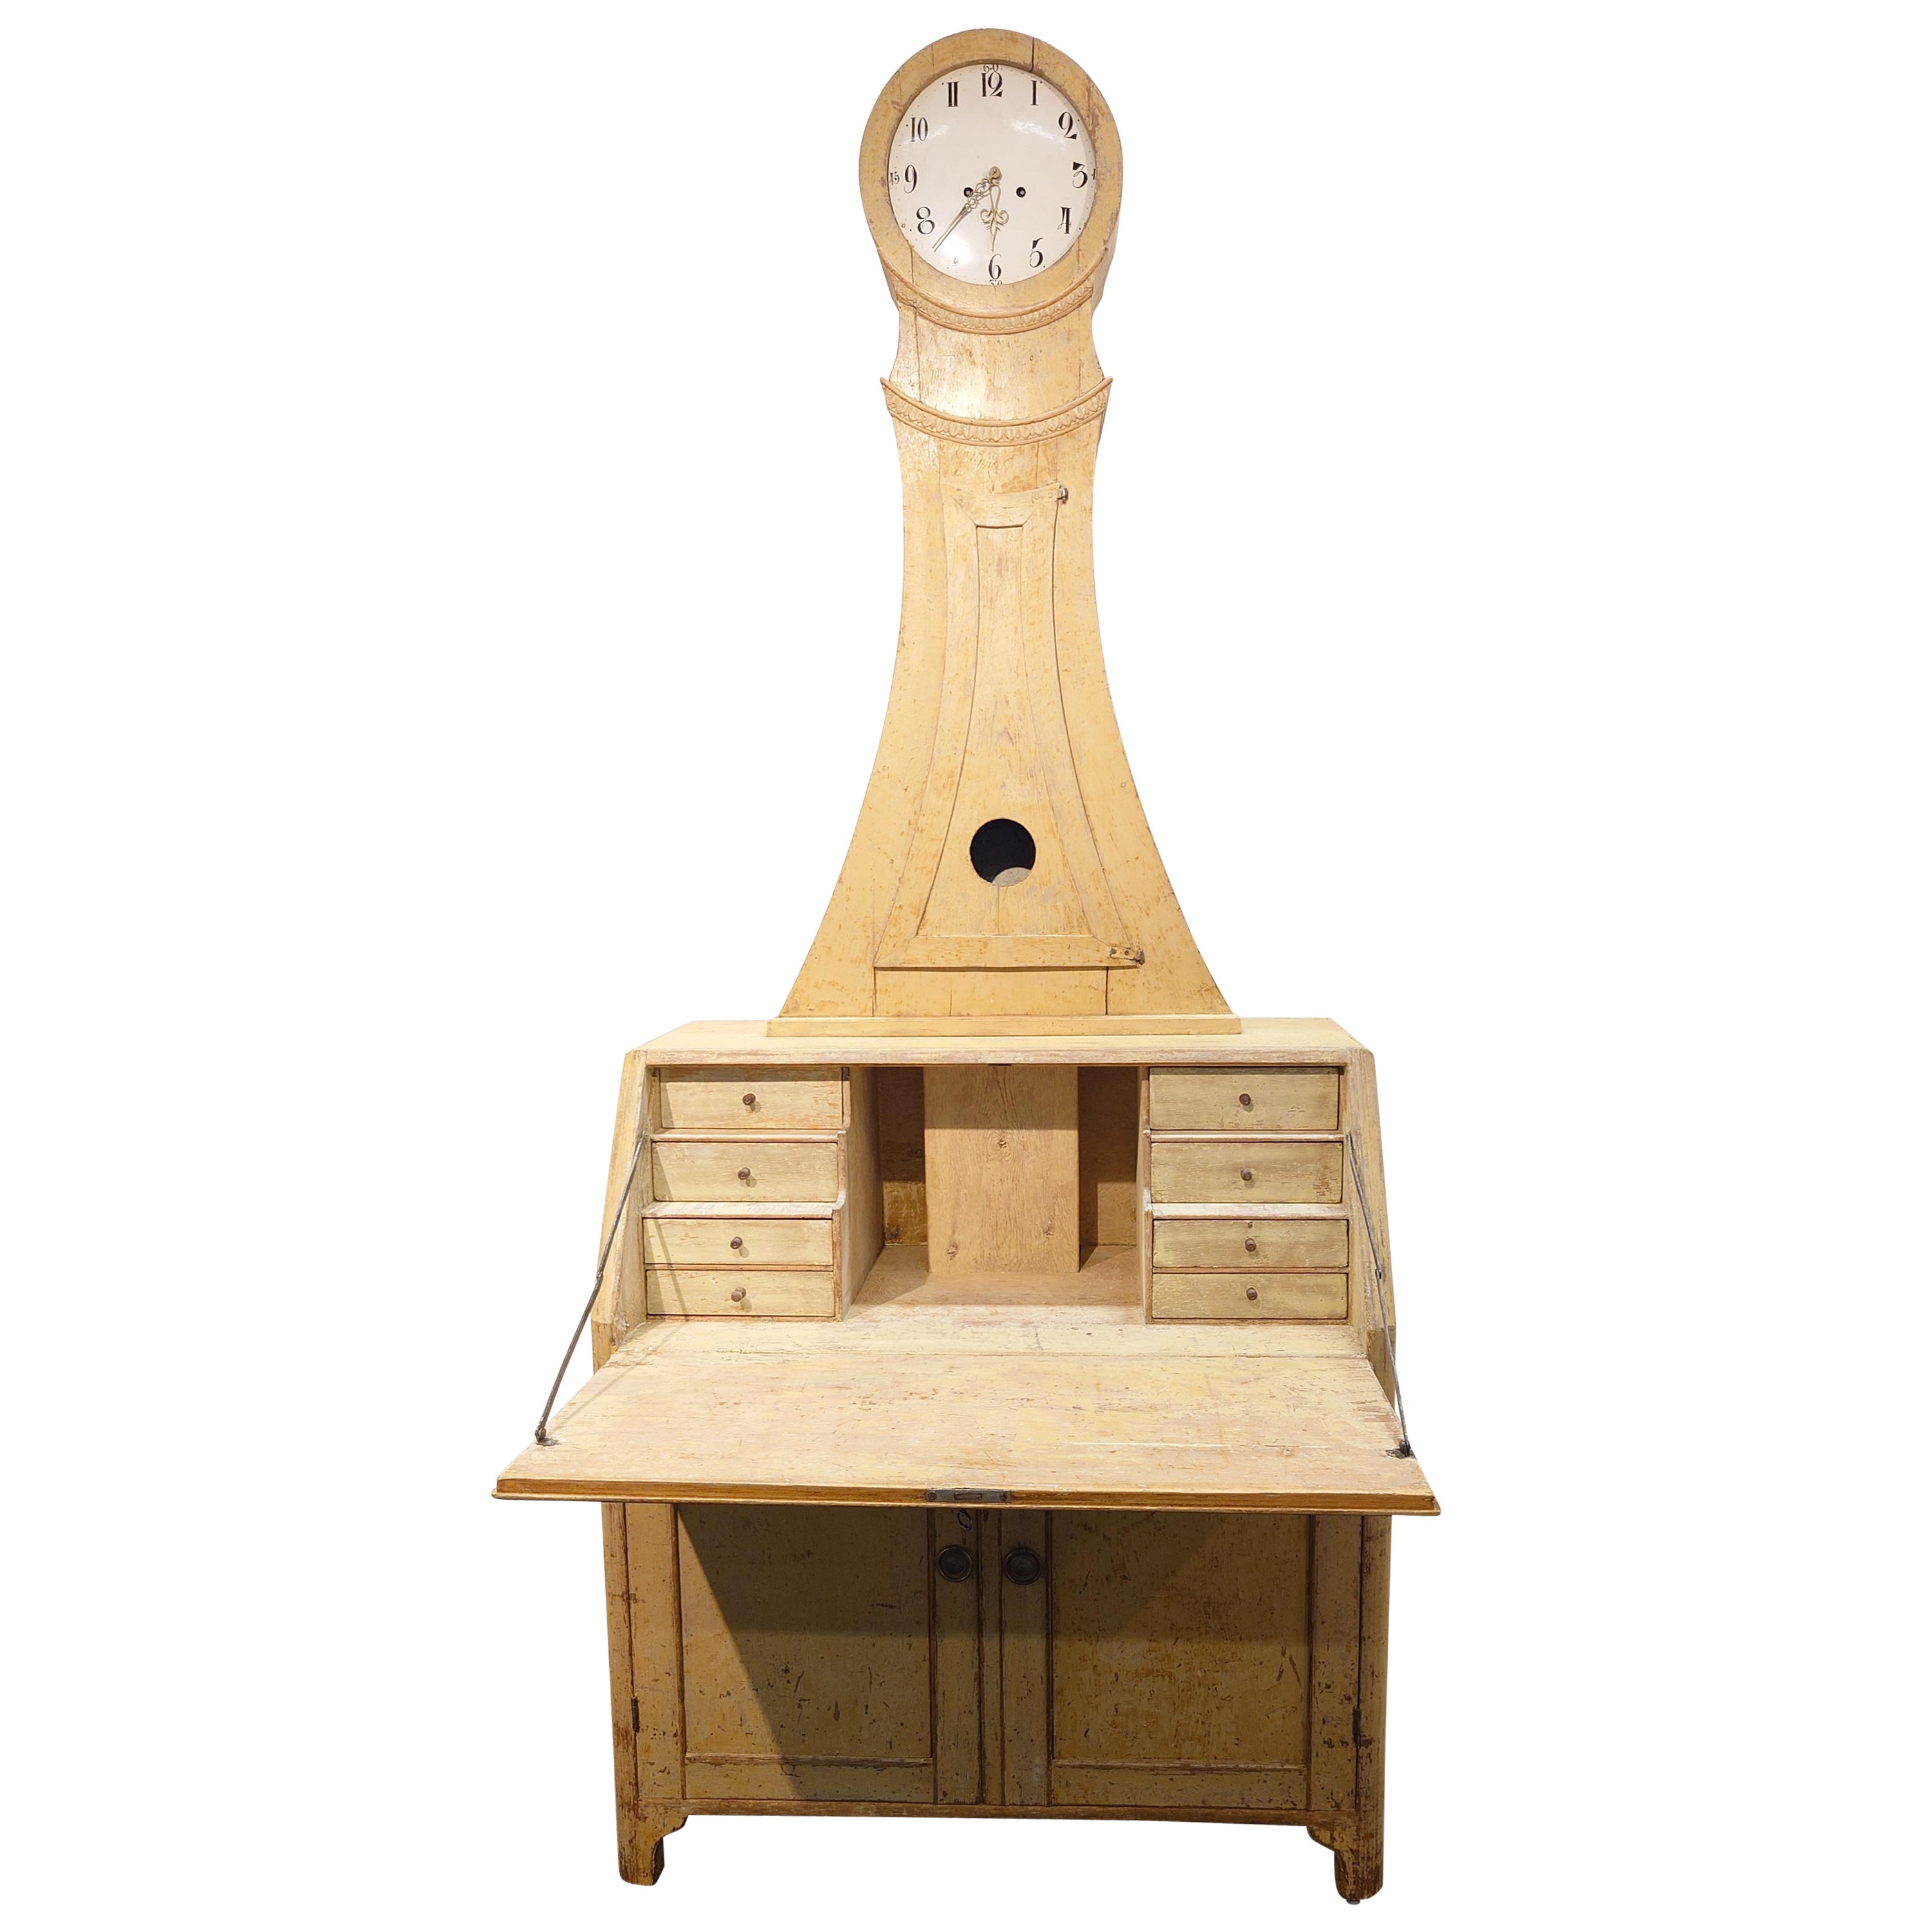  19th Century Rare antique Northern Swedish  pine Secretary clock desk  country For Sale